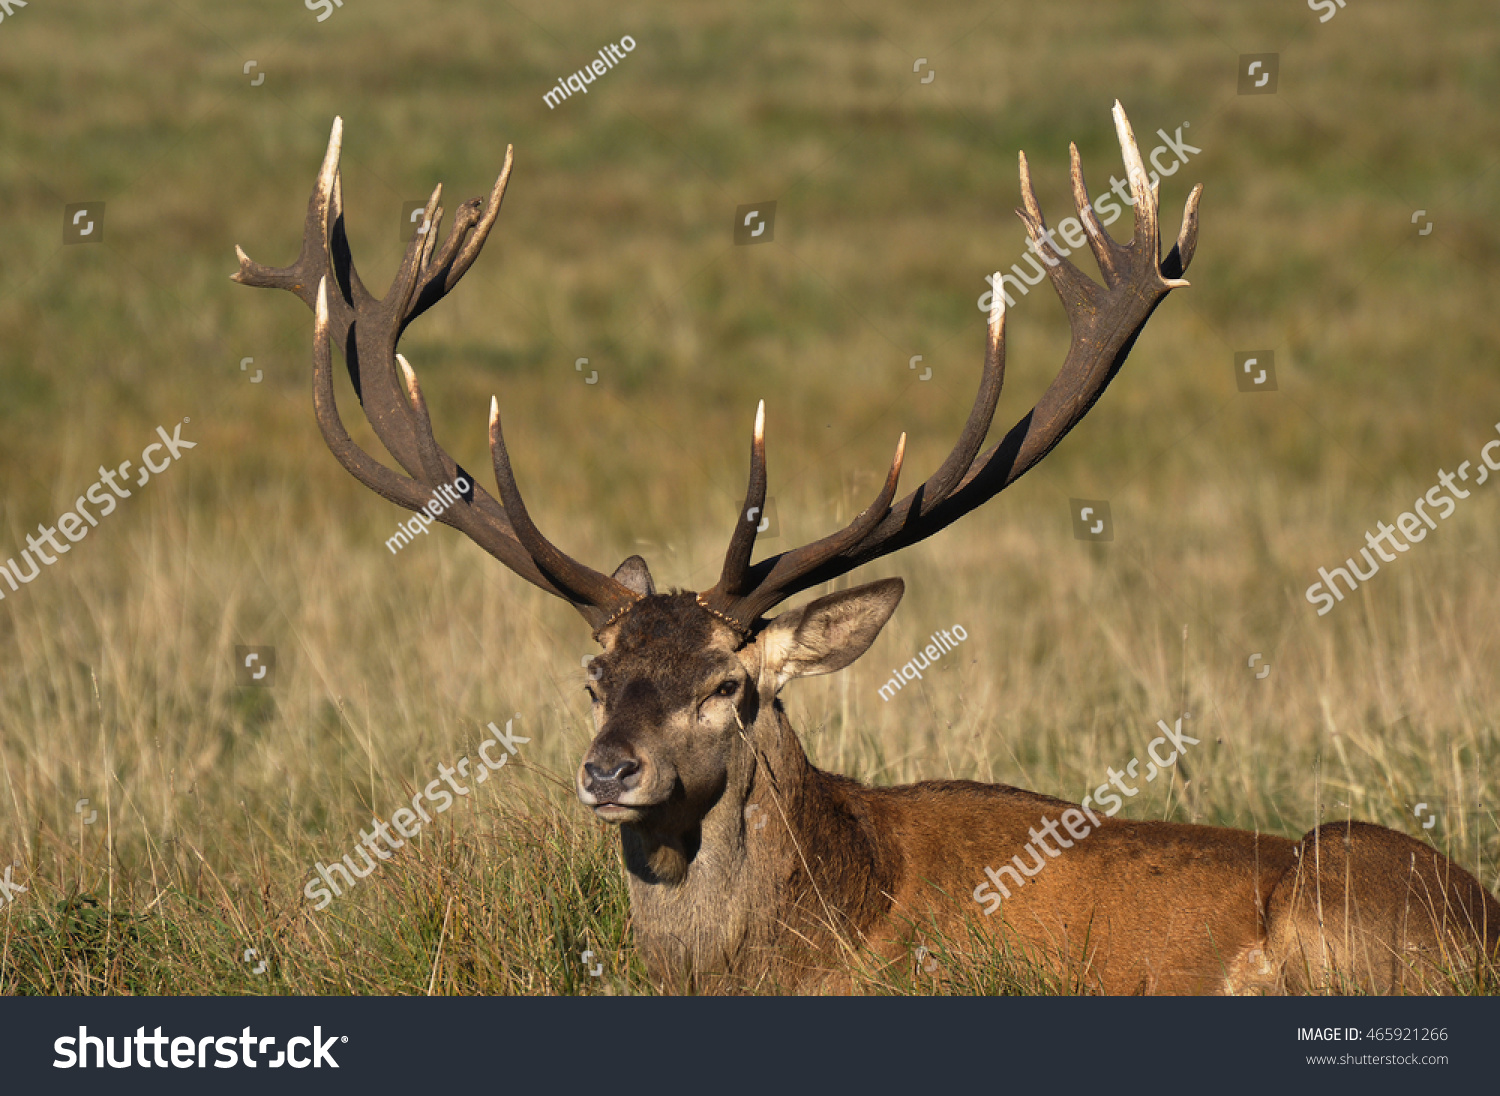 Red deer old stag #465921266